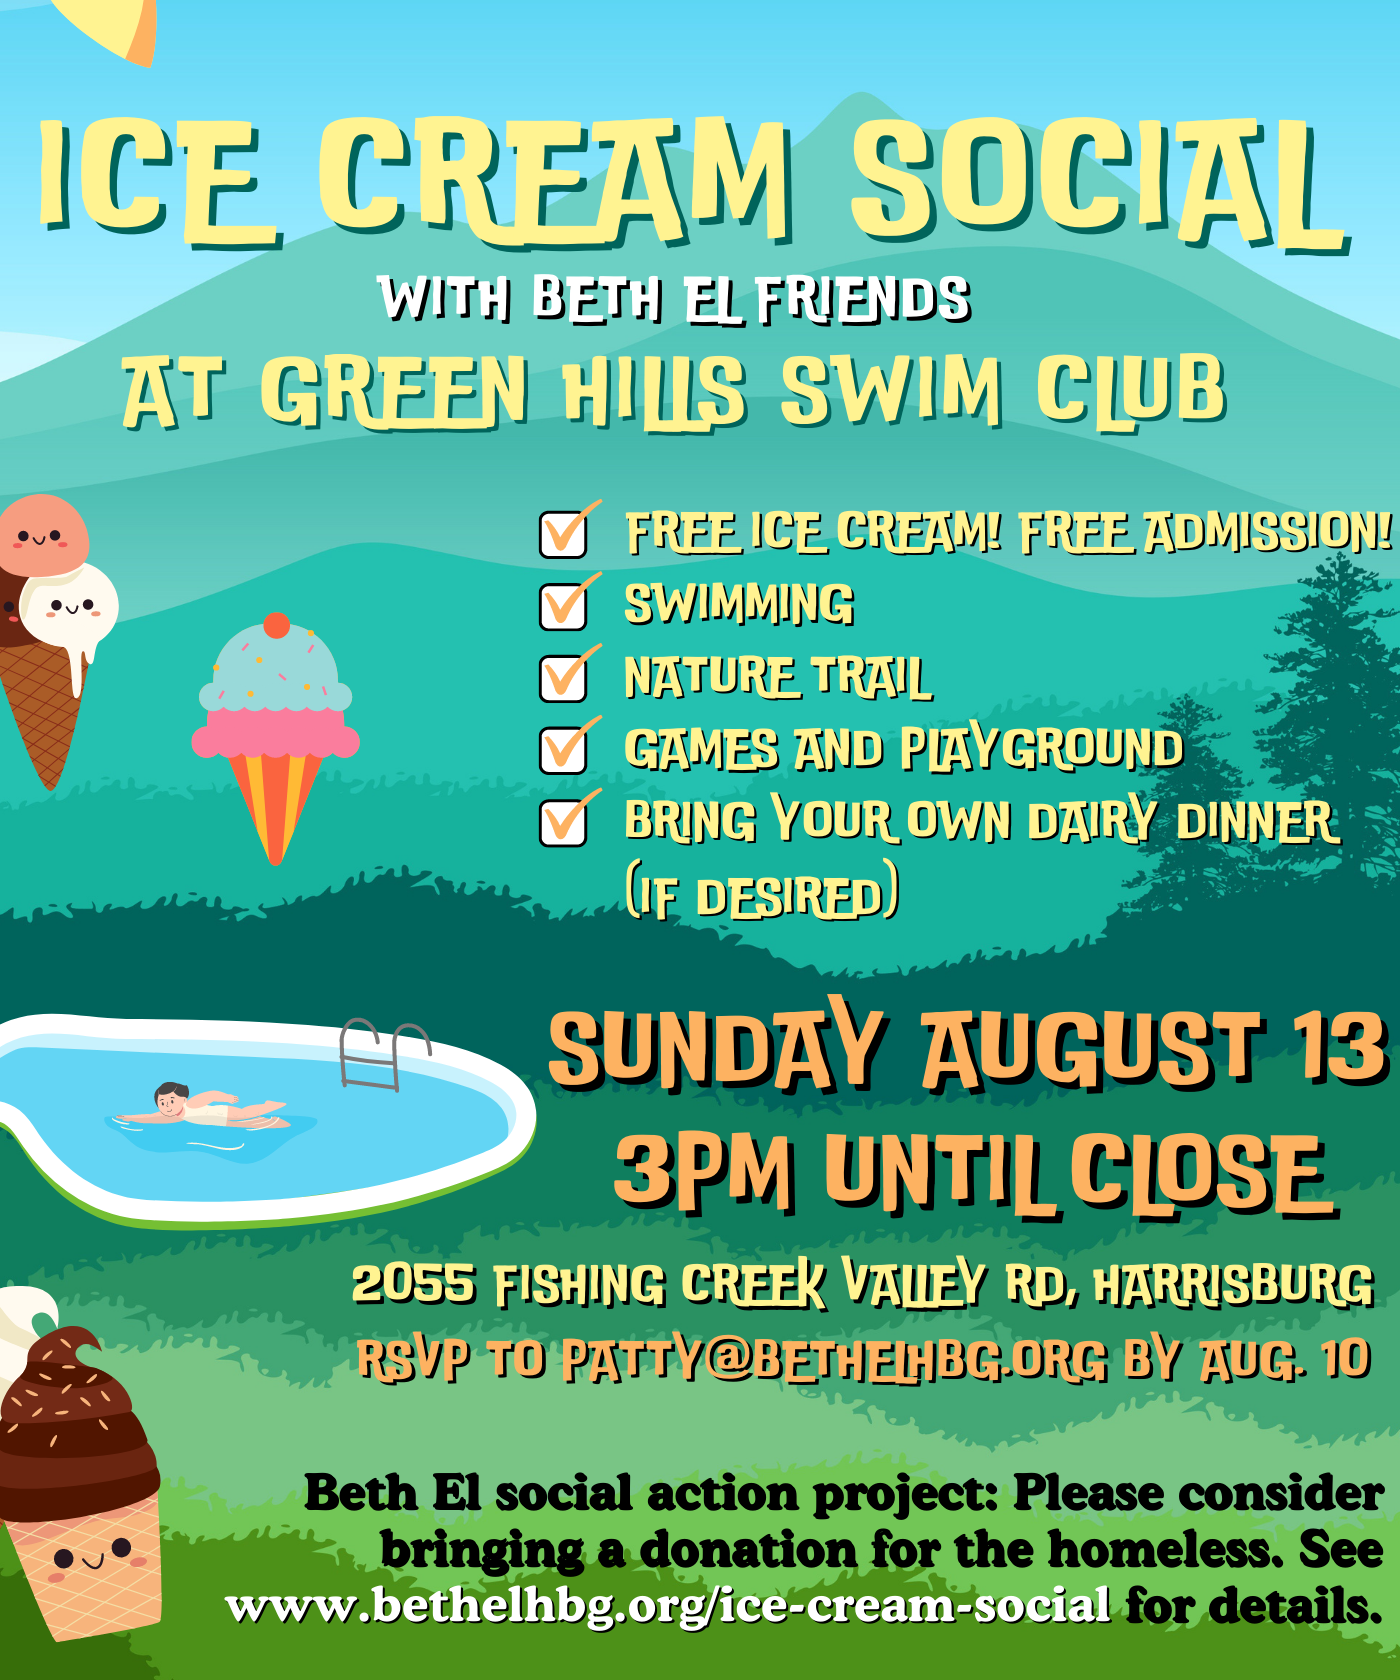 Ice cream social at Green Hills Swim Club